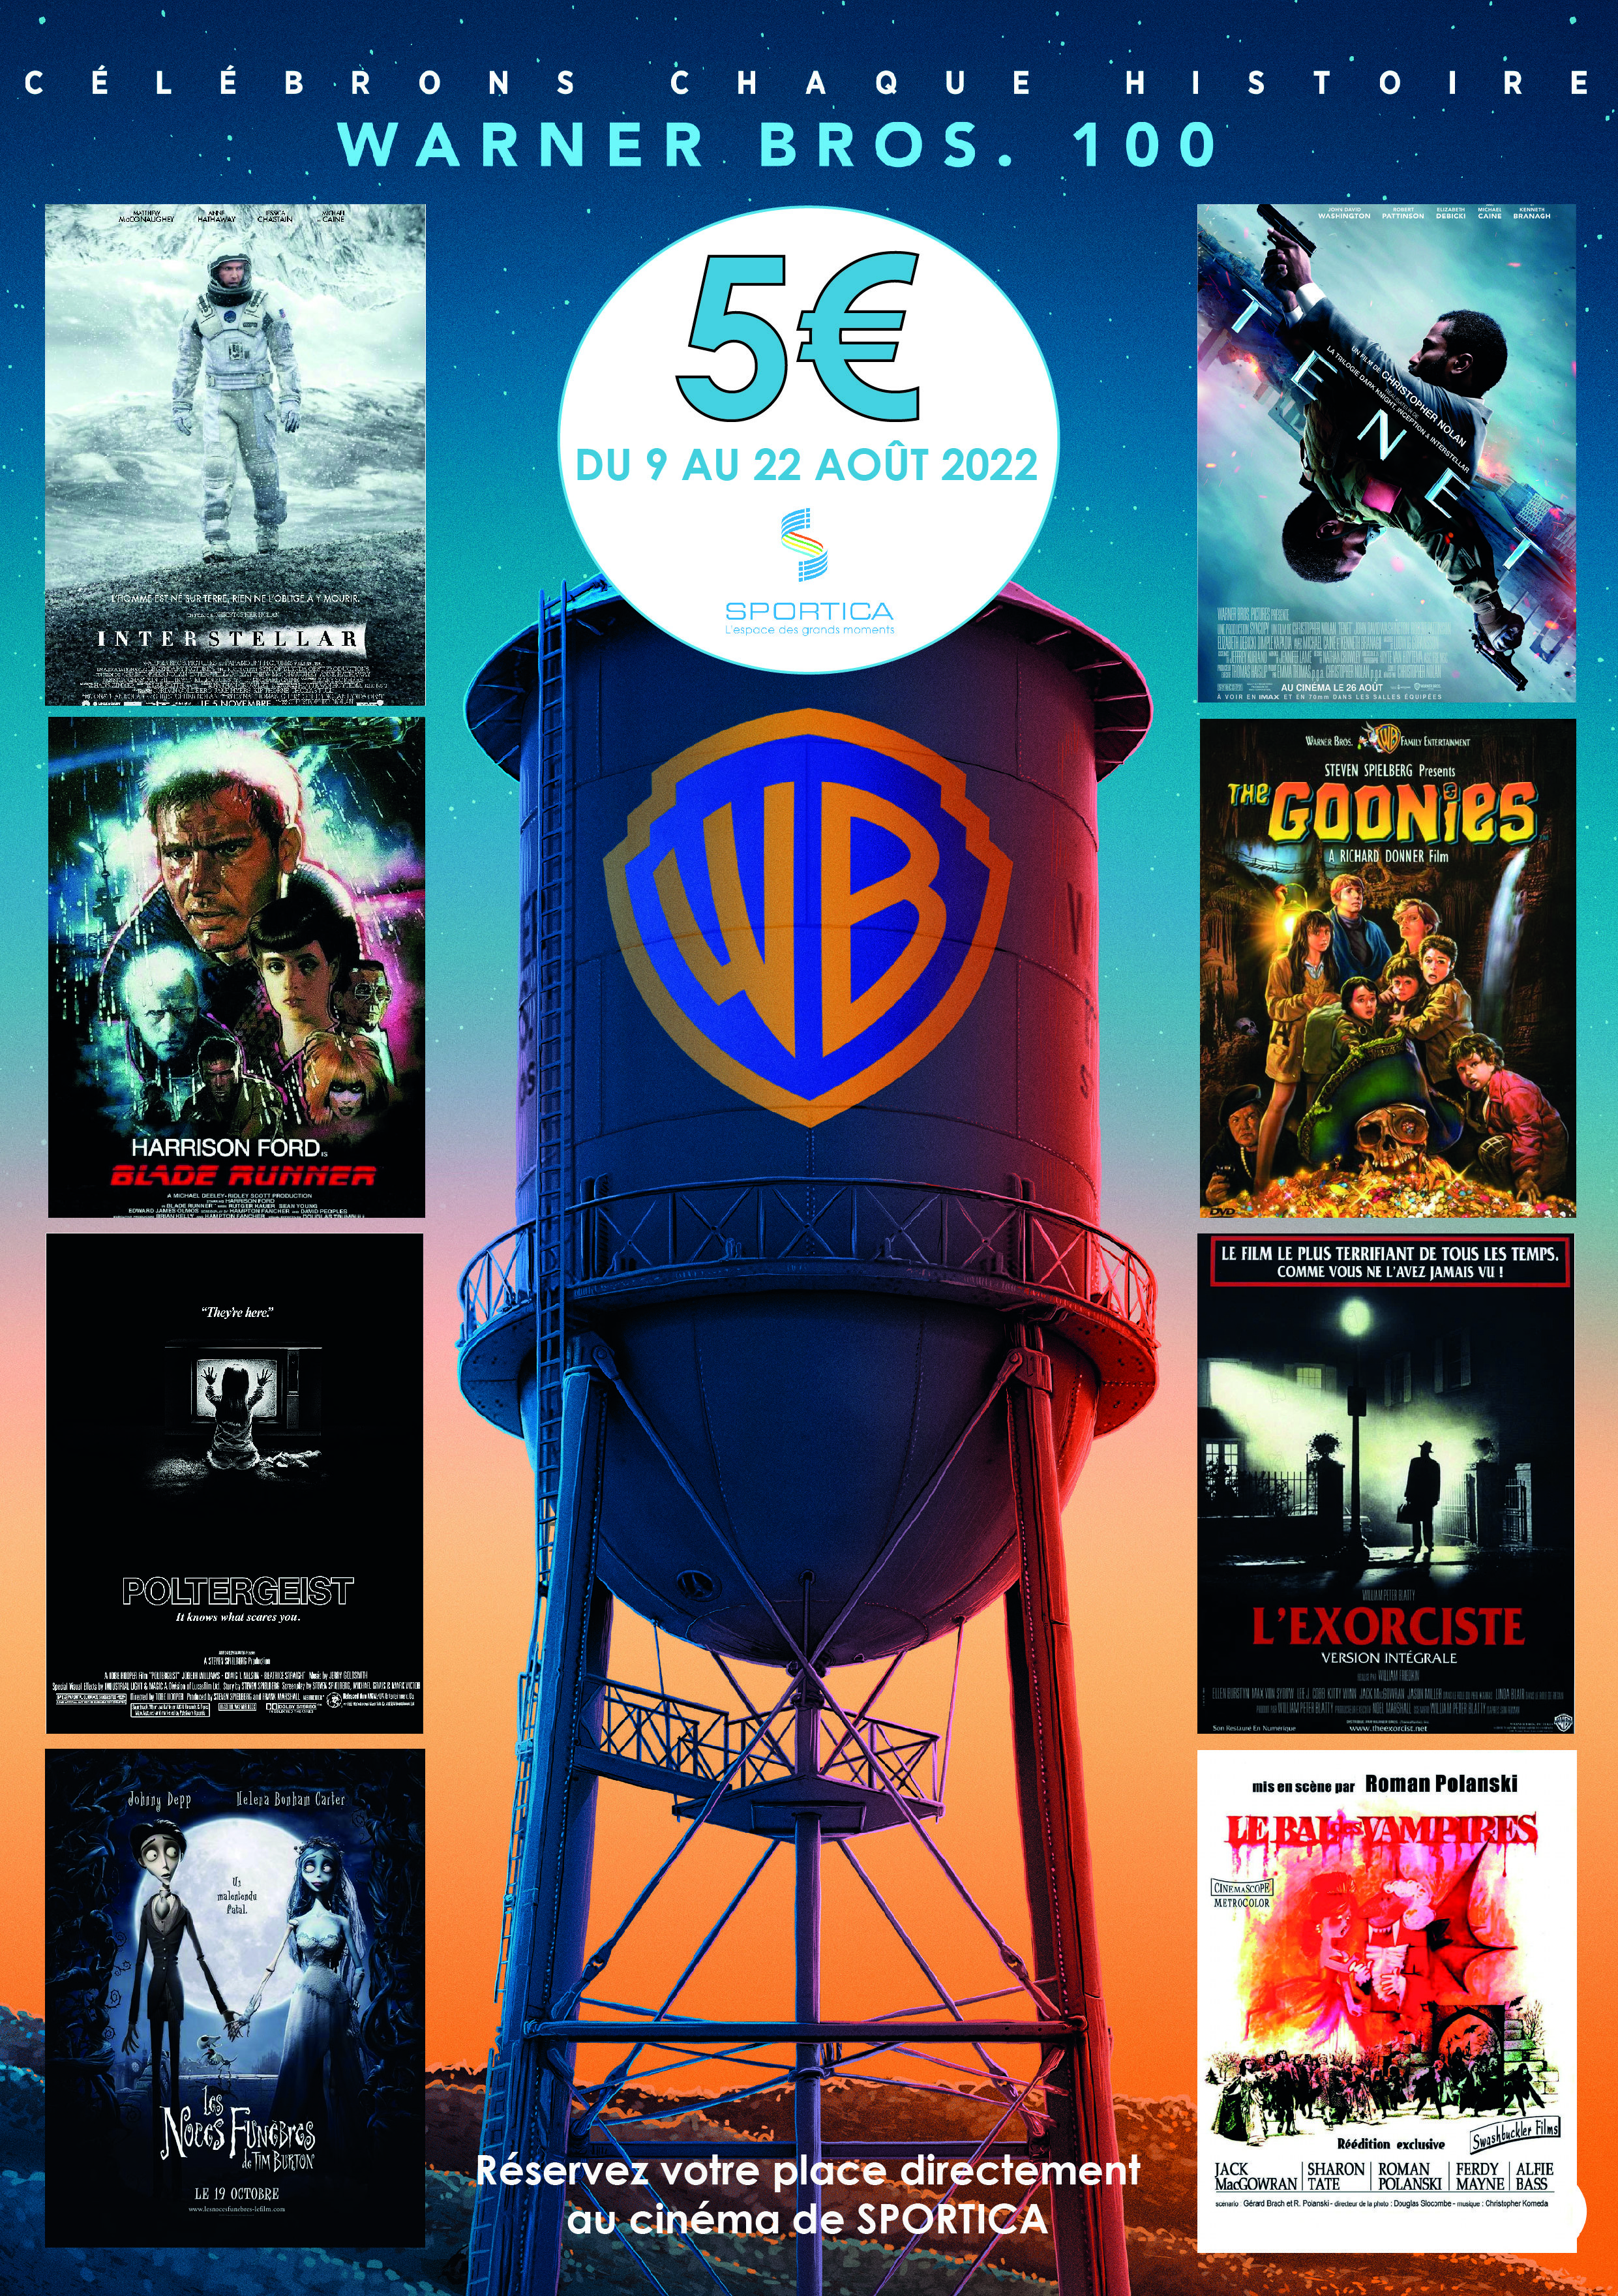 100 ans Warner Bros